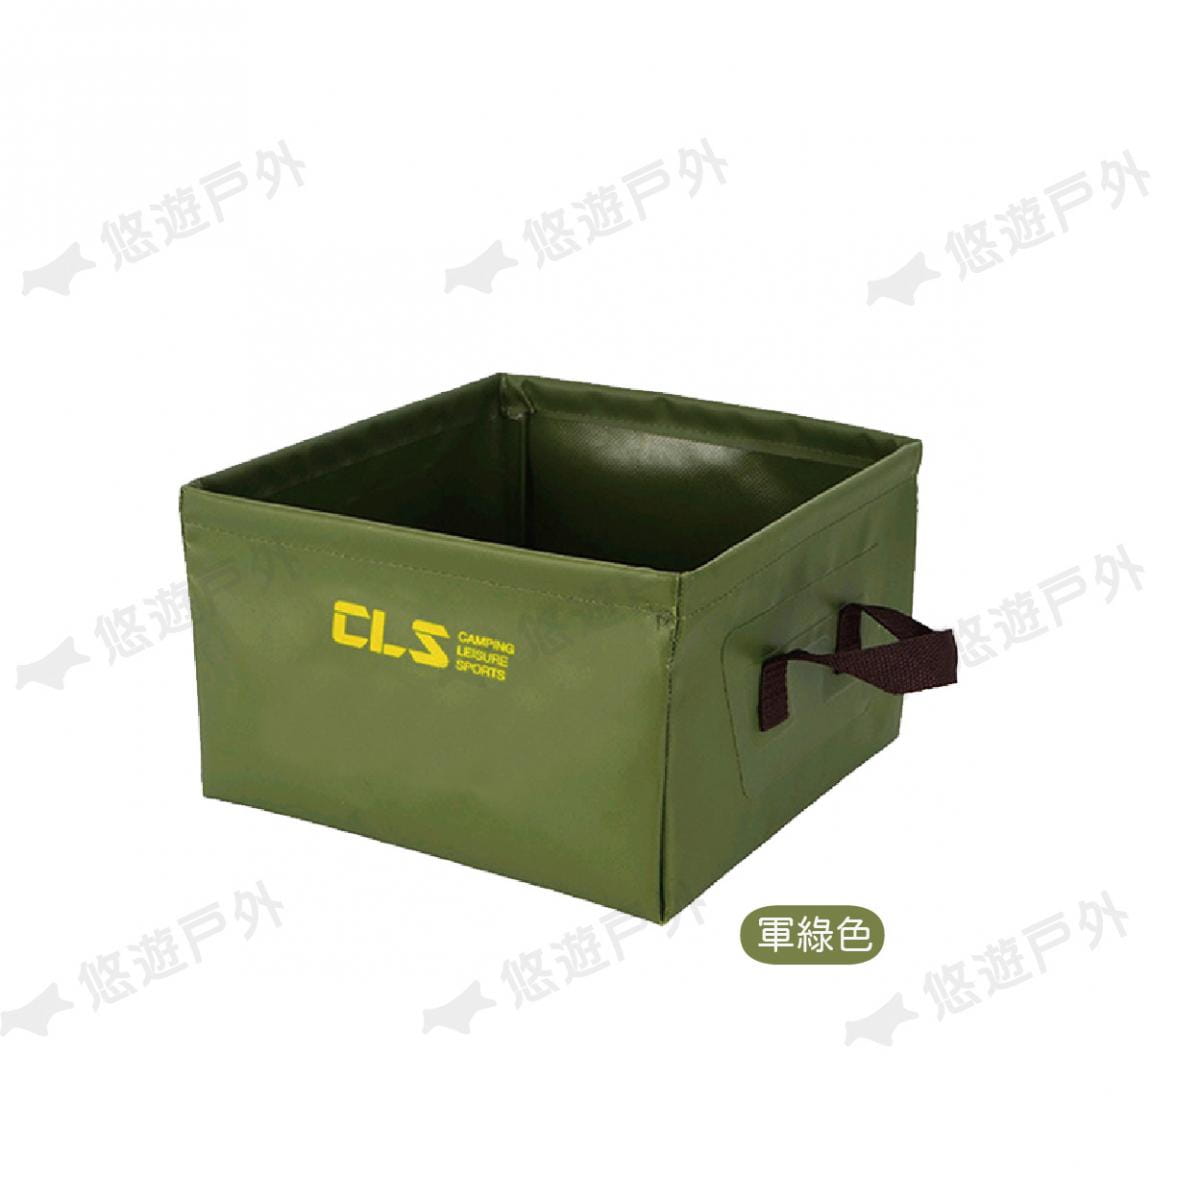 【CLS】韓國 戶外 多功能 方形折疊水桶 儲水盆 水袋 五色可選 13L 應急儲水 環保防水材質 3